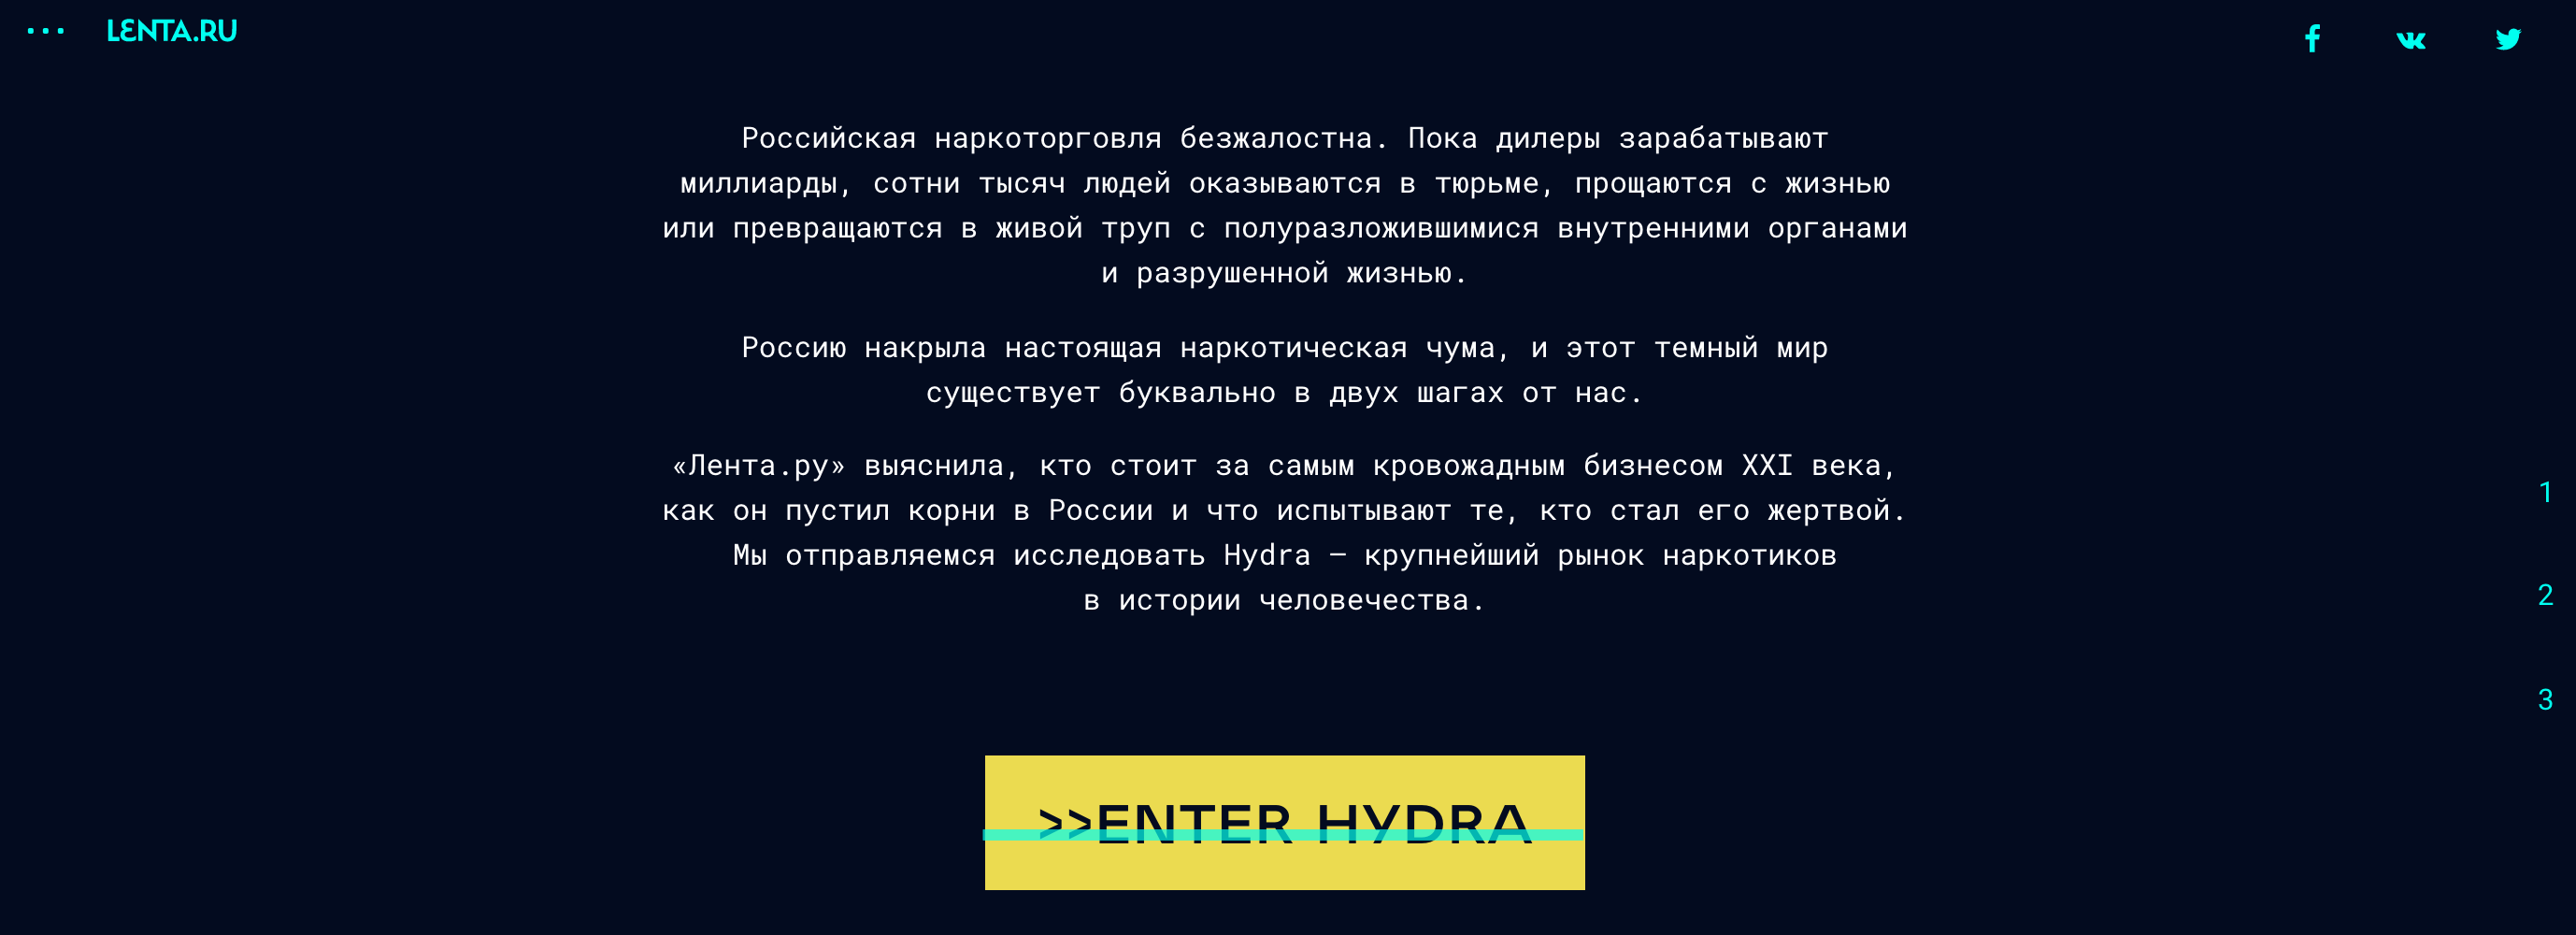 http darknet lenta ru гидра